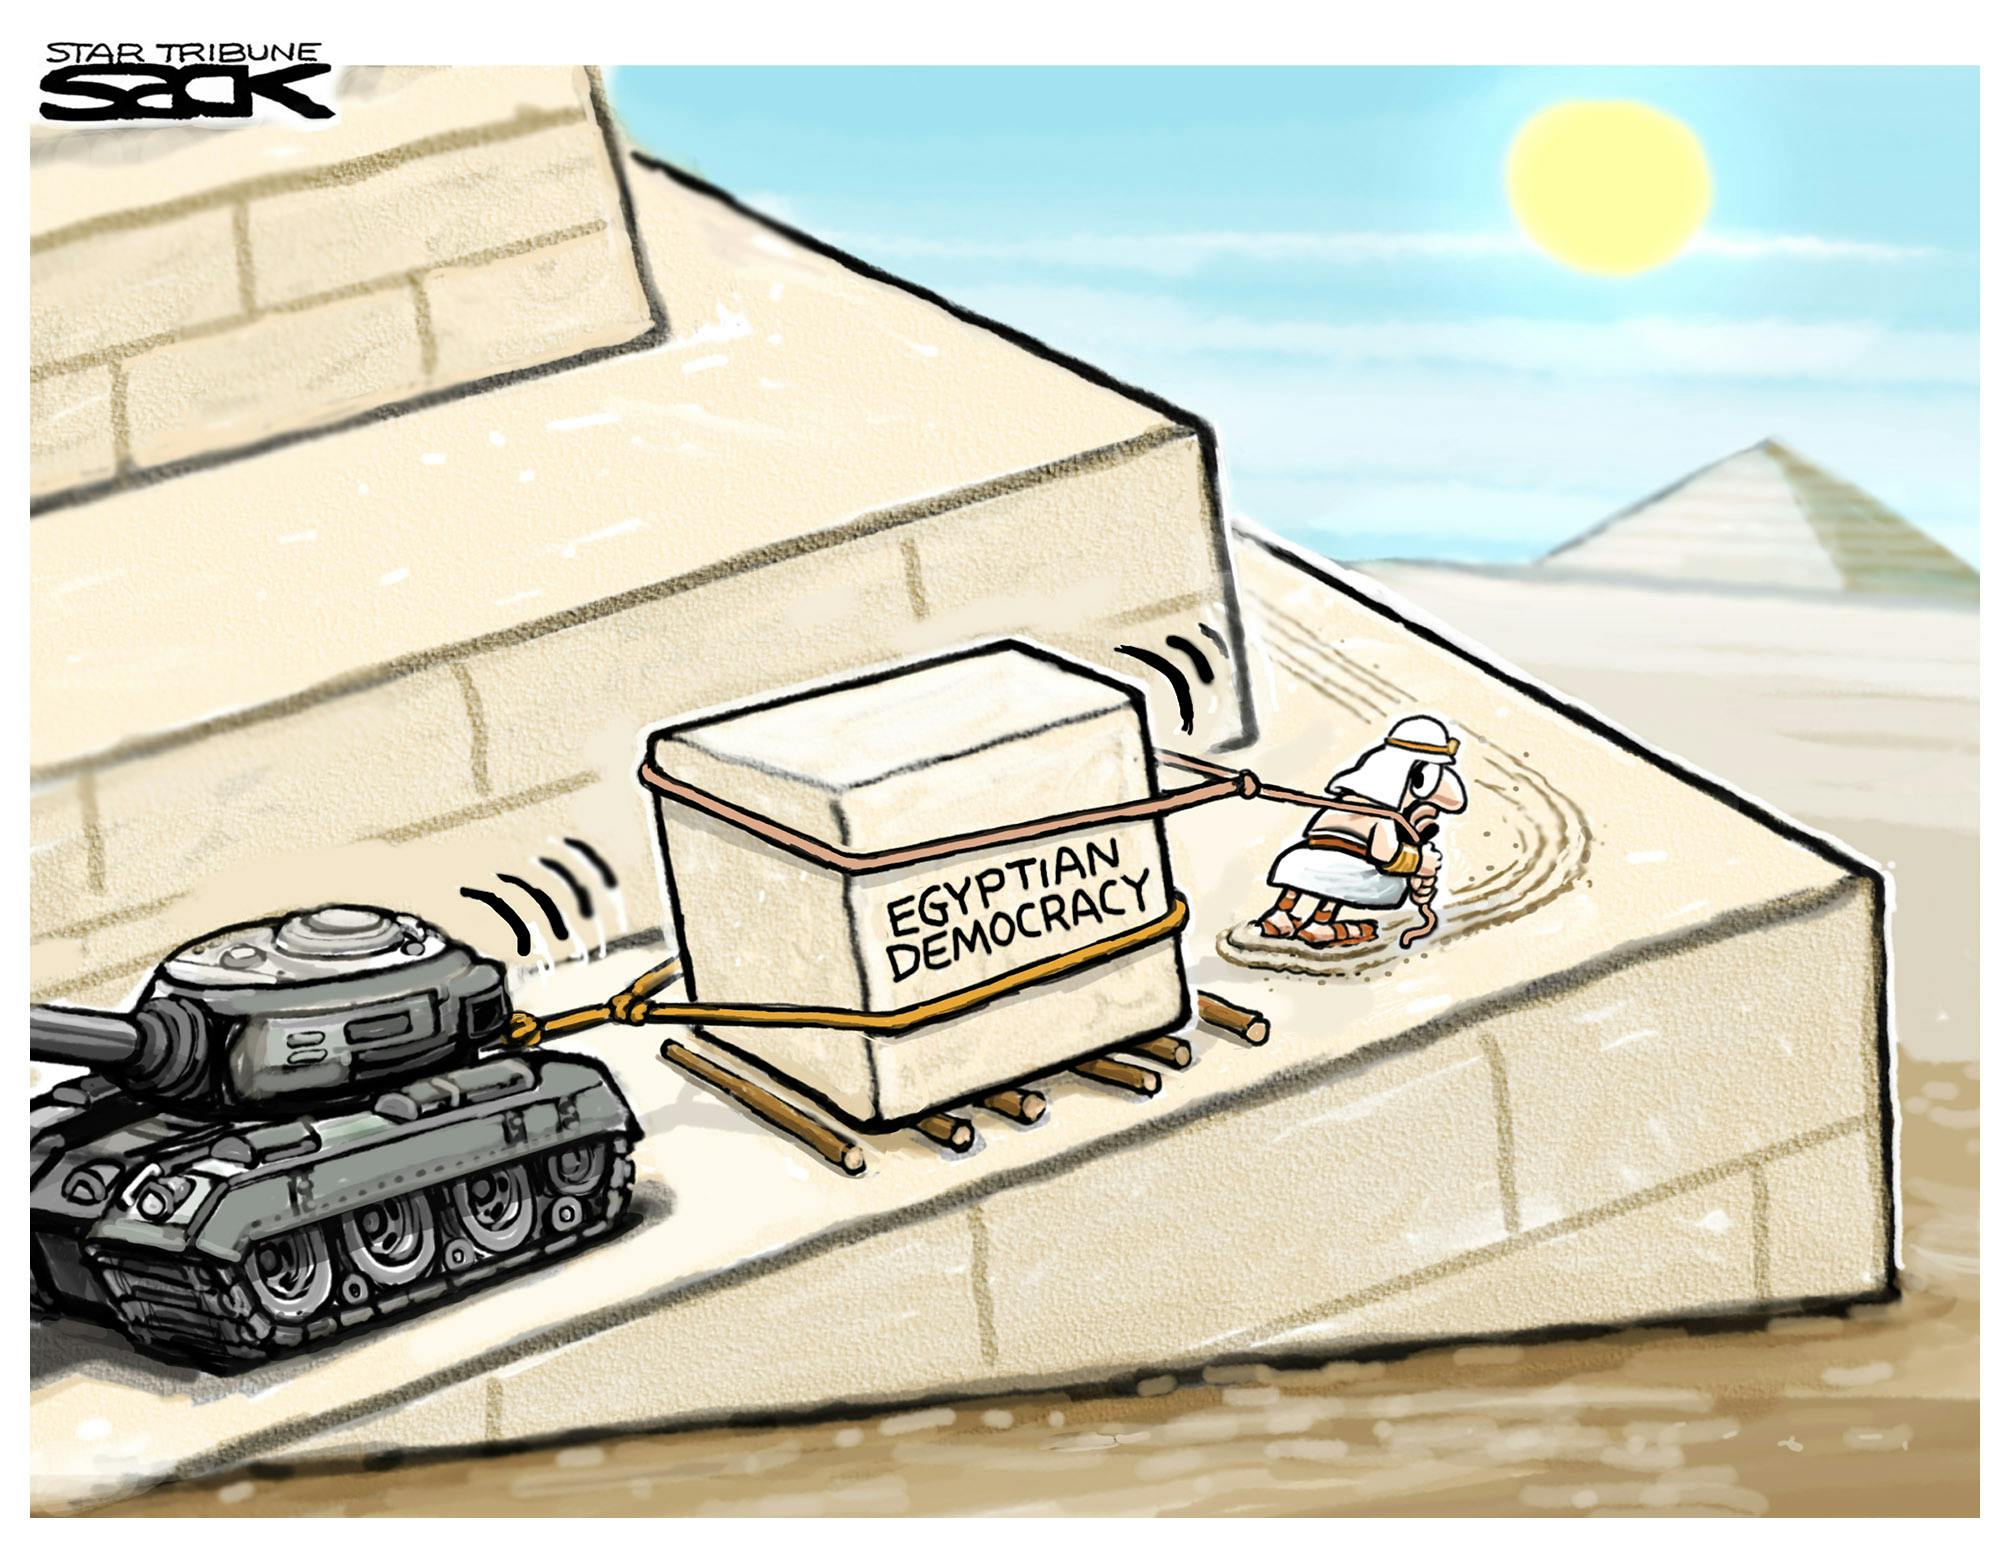 Sack cartoon: Egyptian democracy